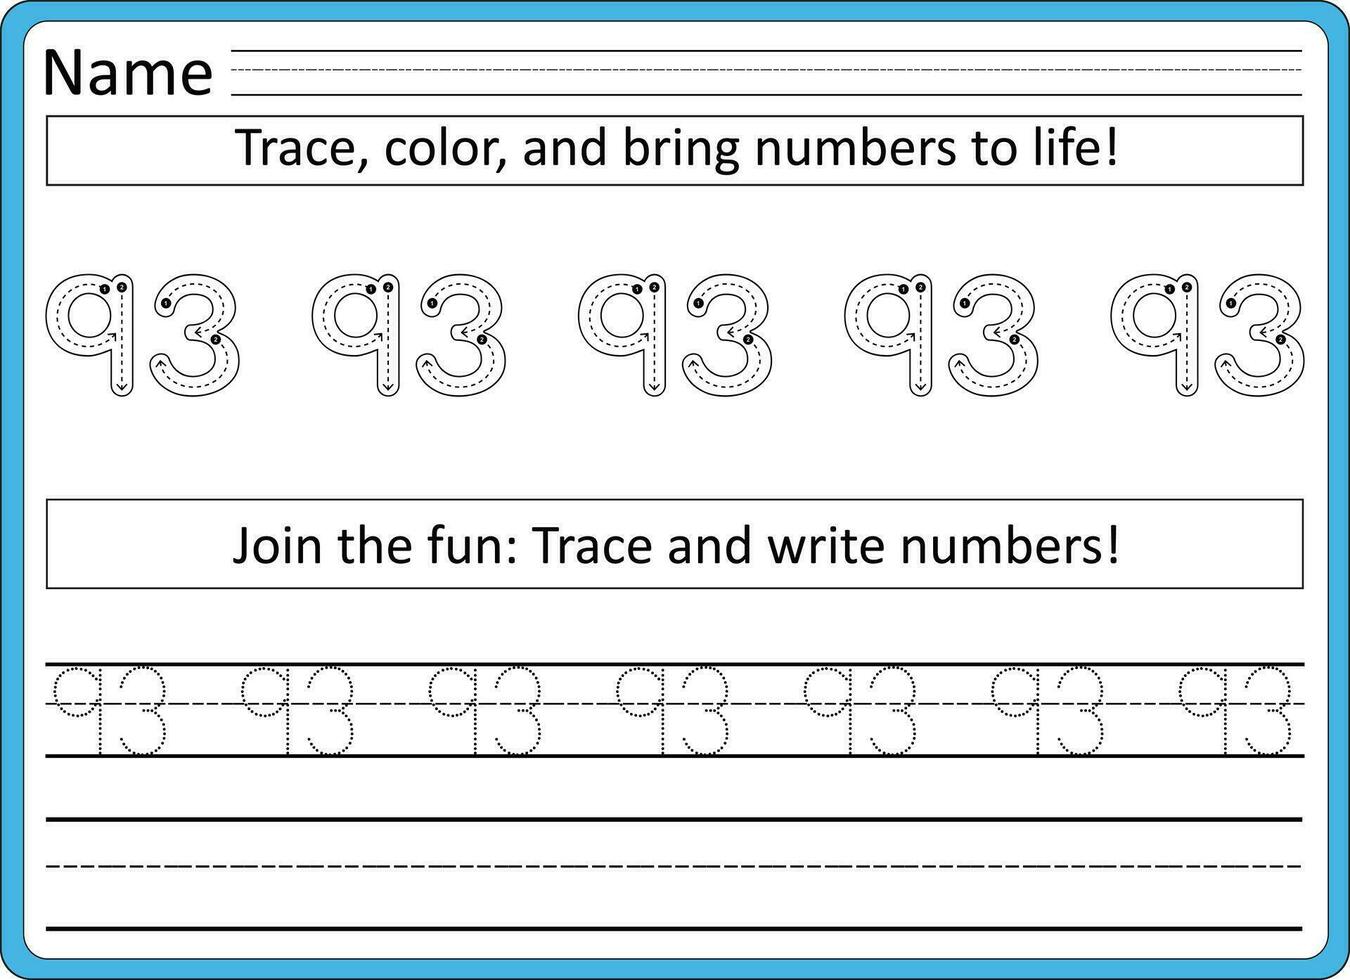 Tracing worksheets for kids  handwriting practice vector